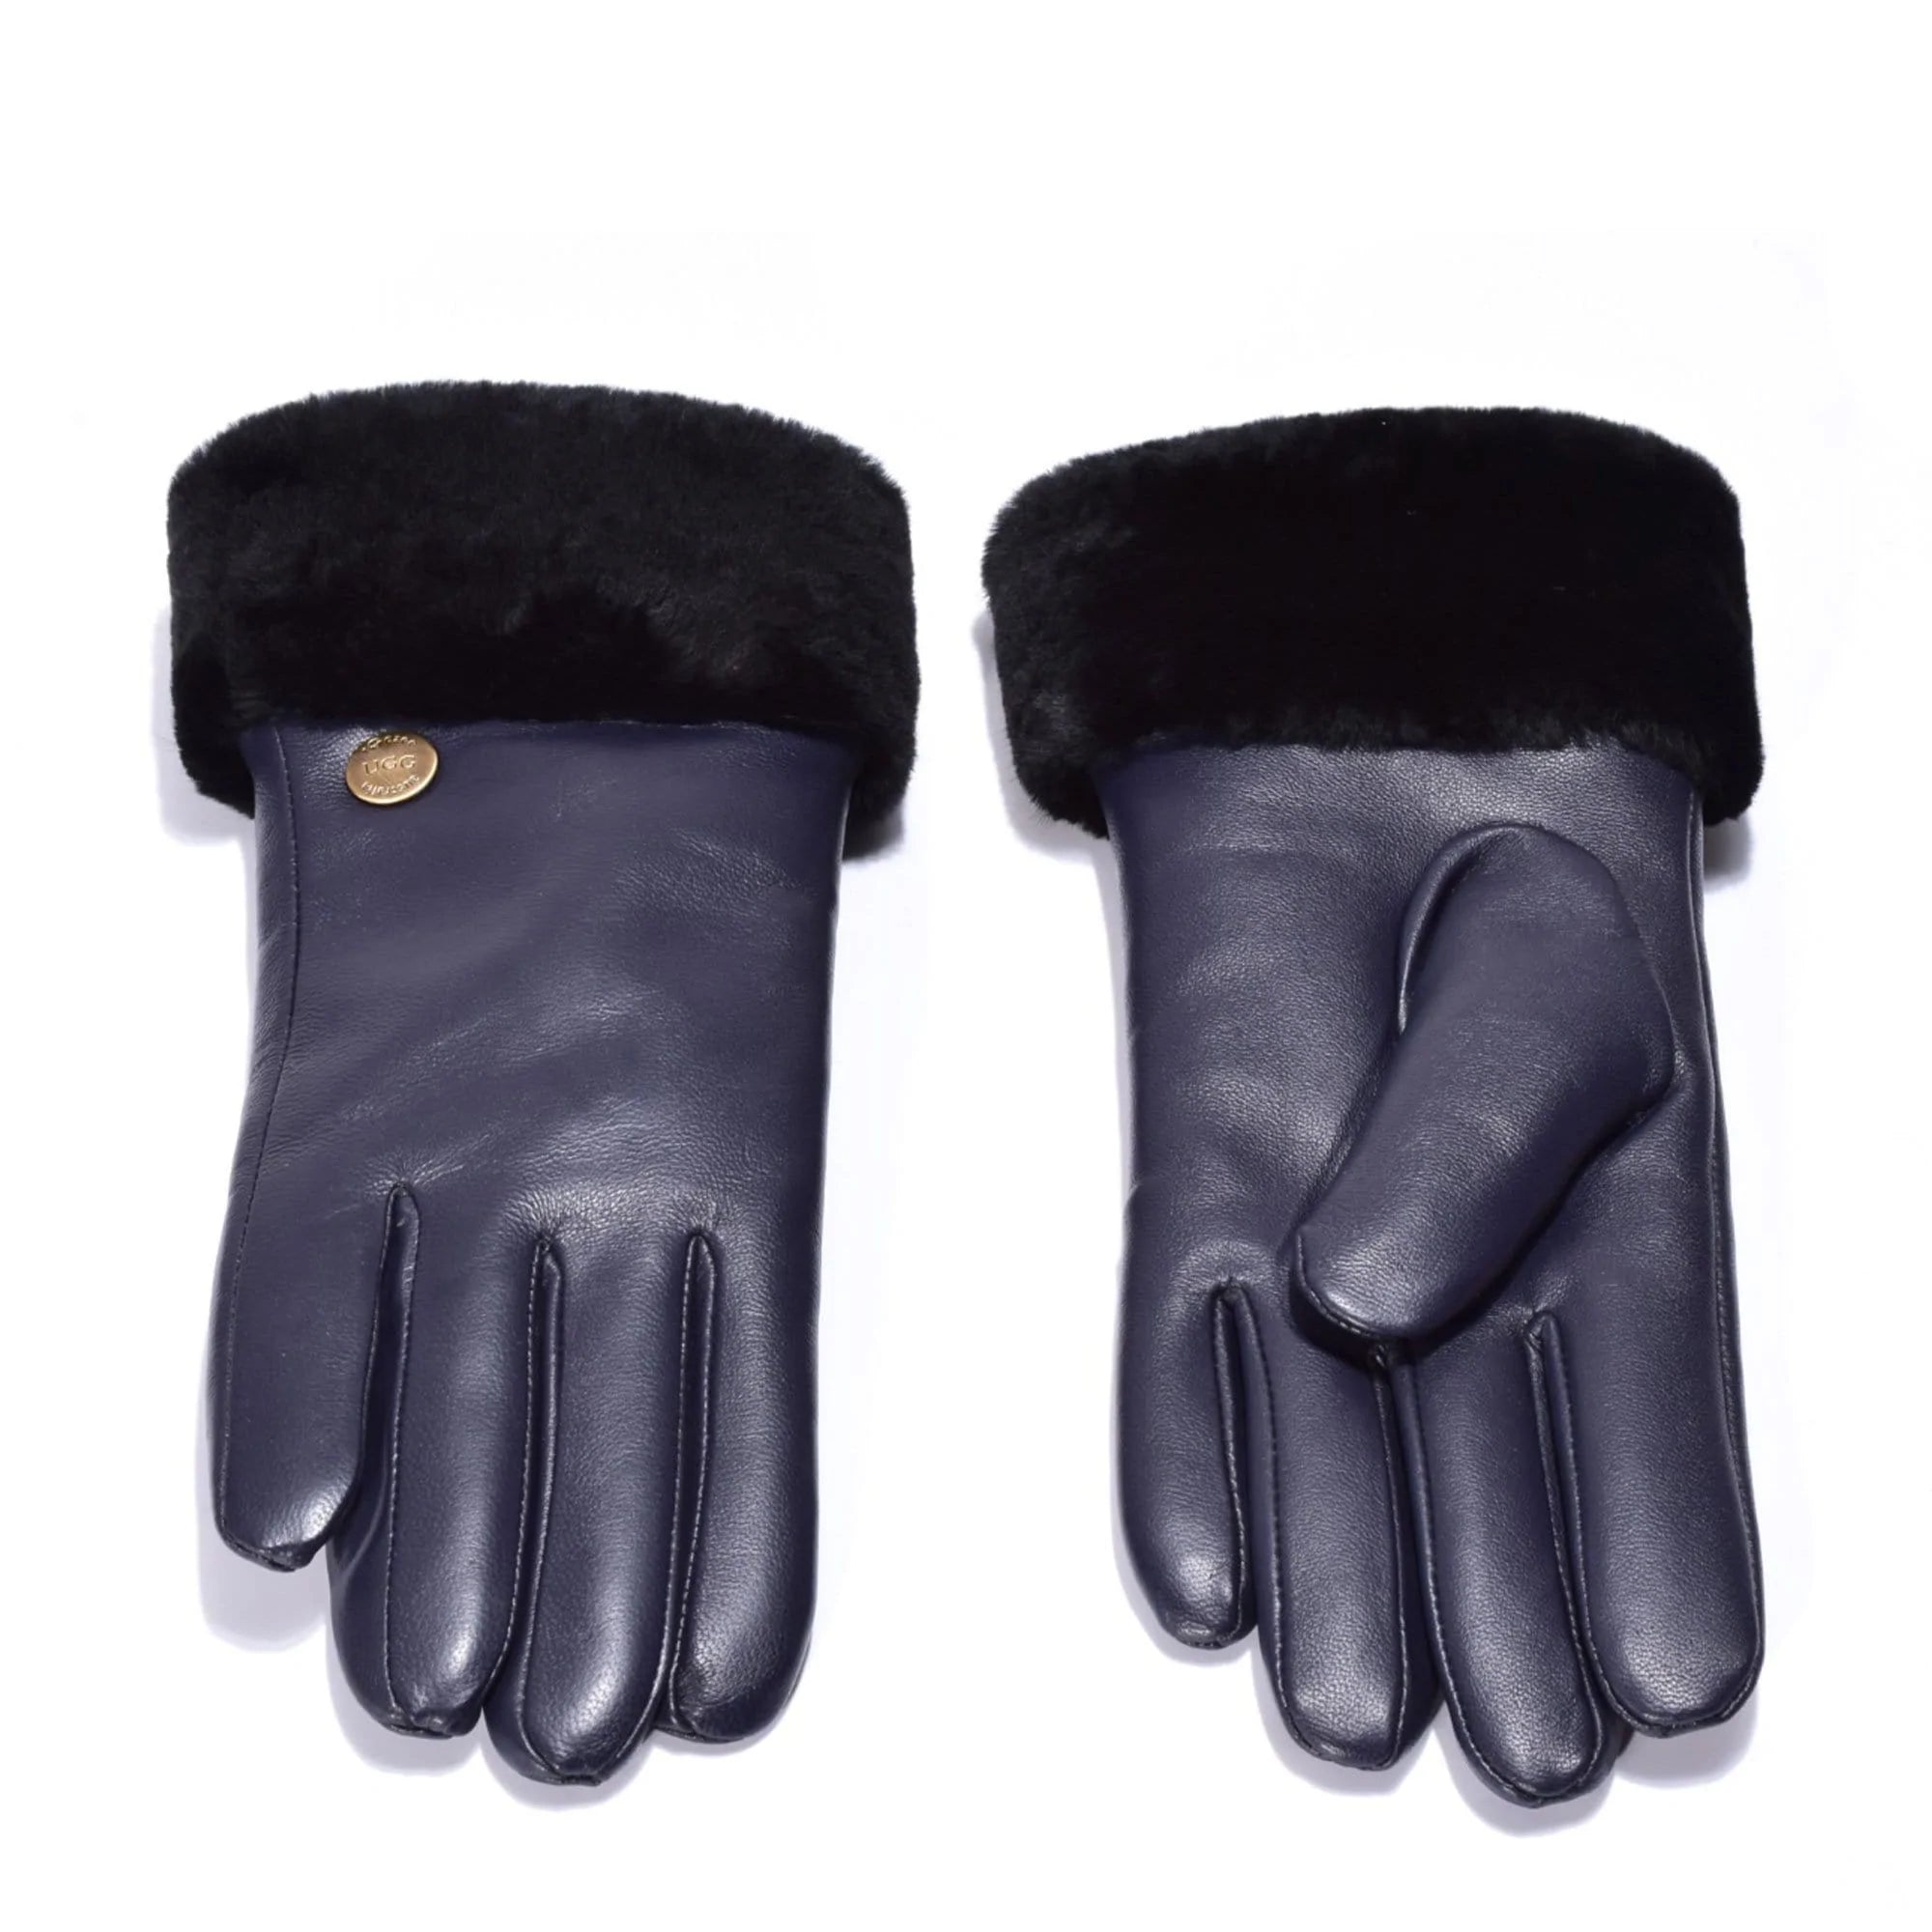  - UGG Single Cuff Nappa Gloves - Original UGG Australia Classic